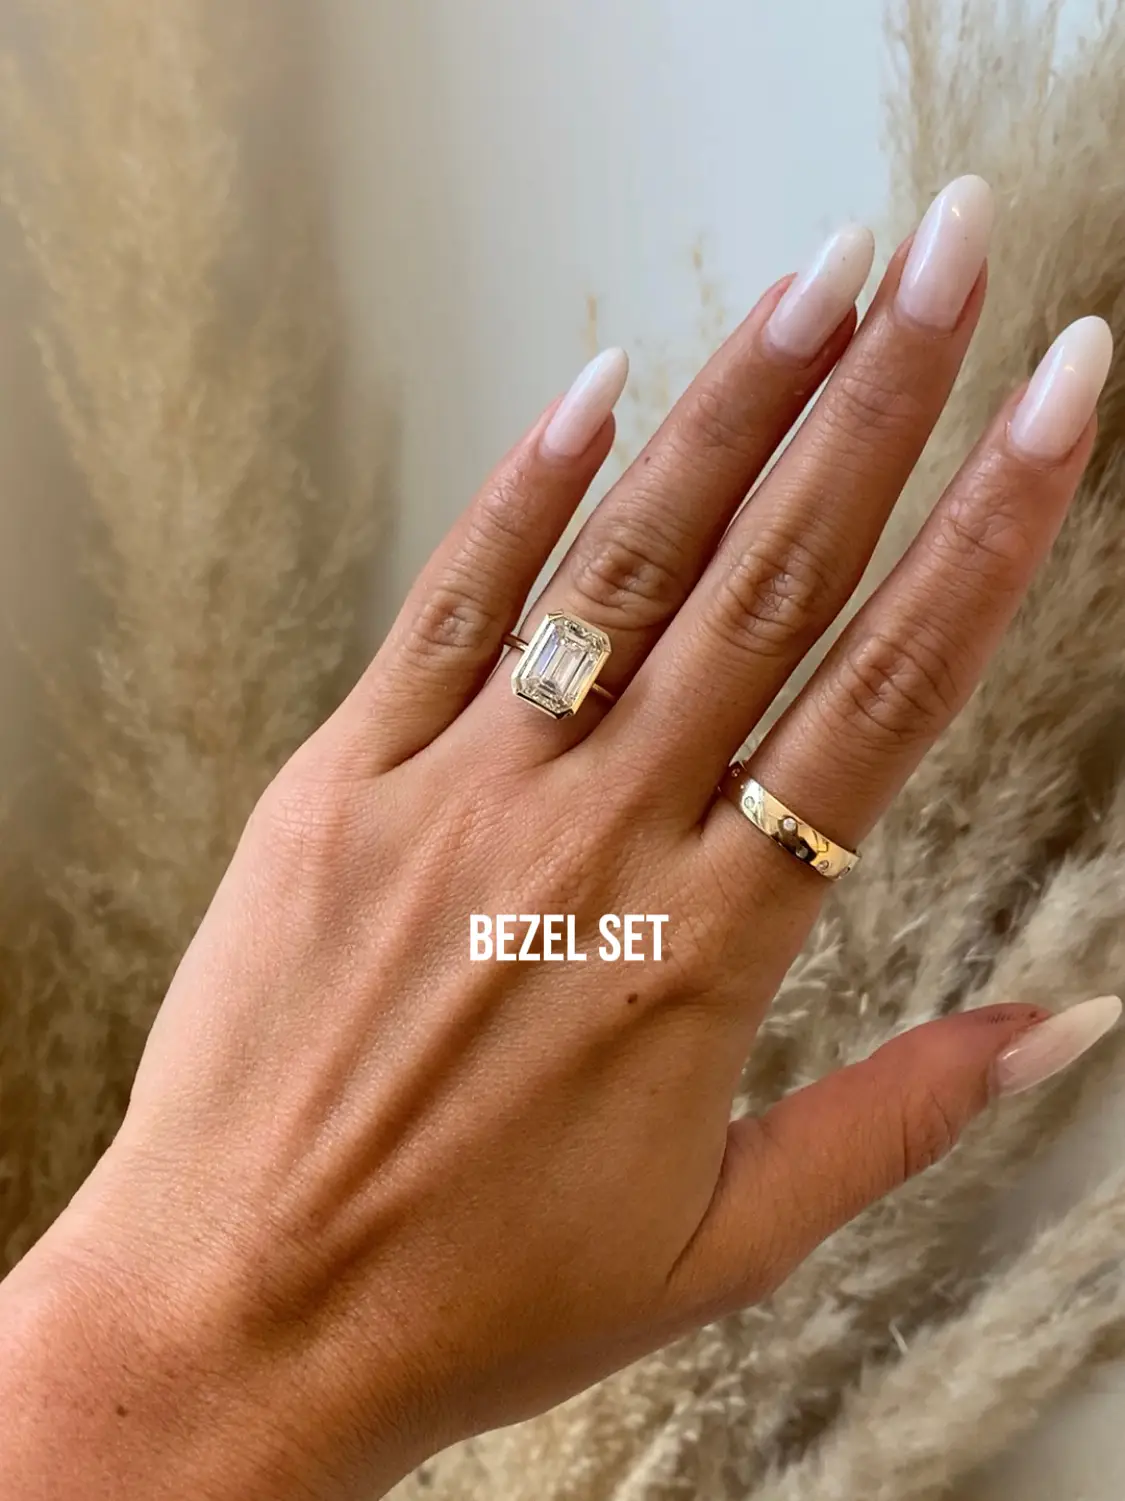 Bezel Set Emerald Cut Band – The Clear Cut